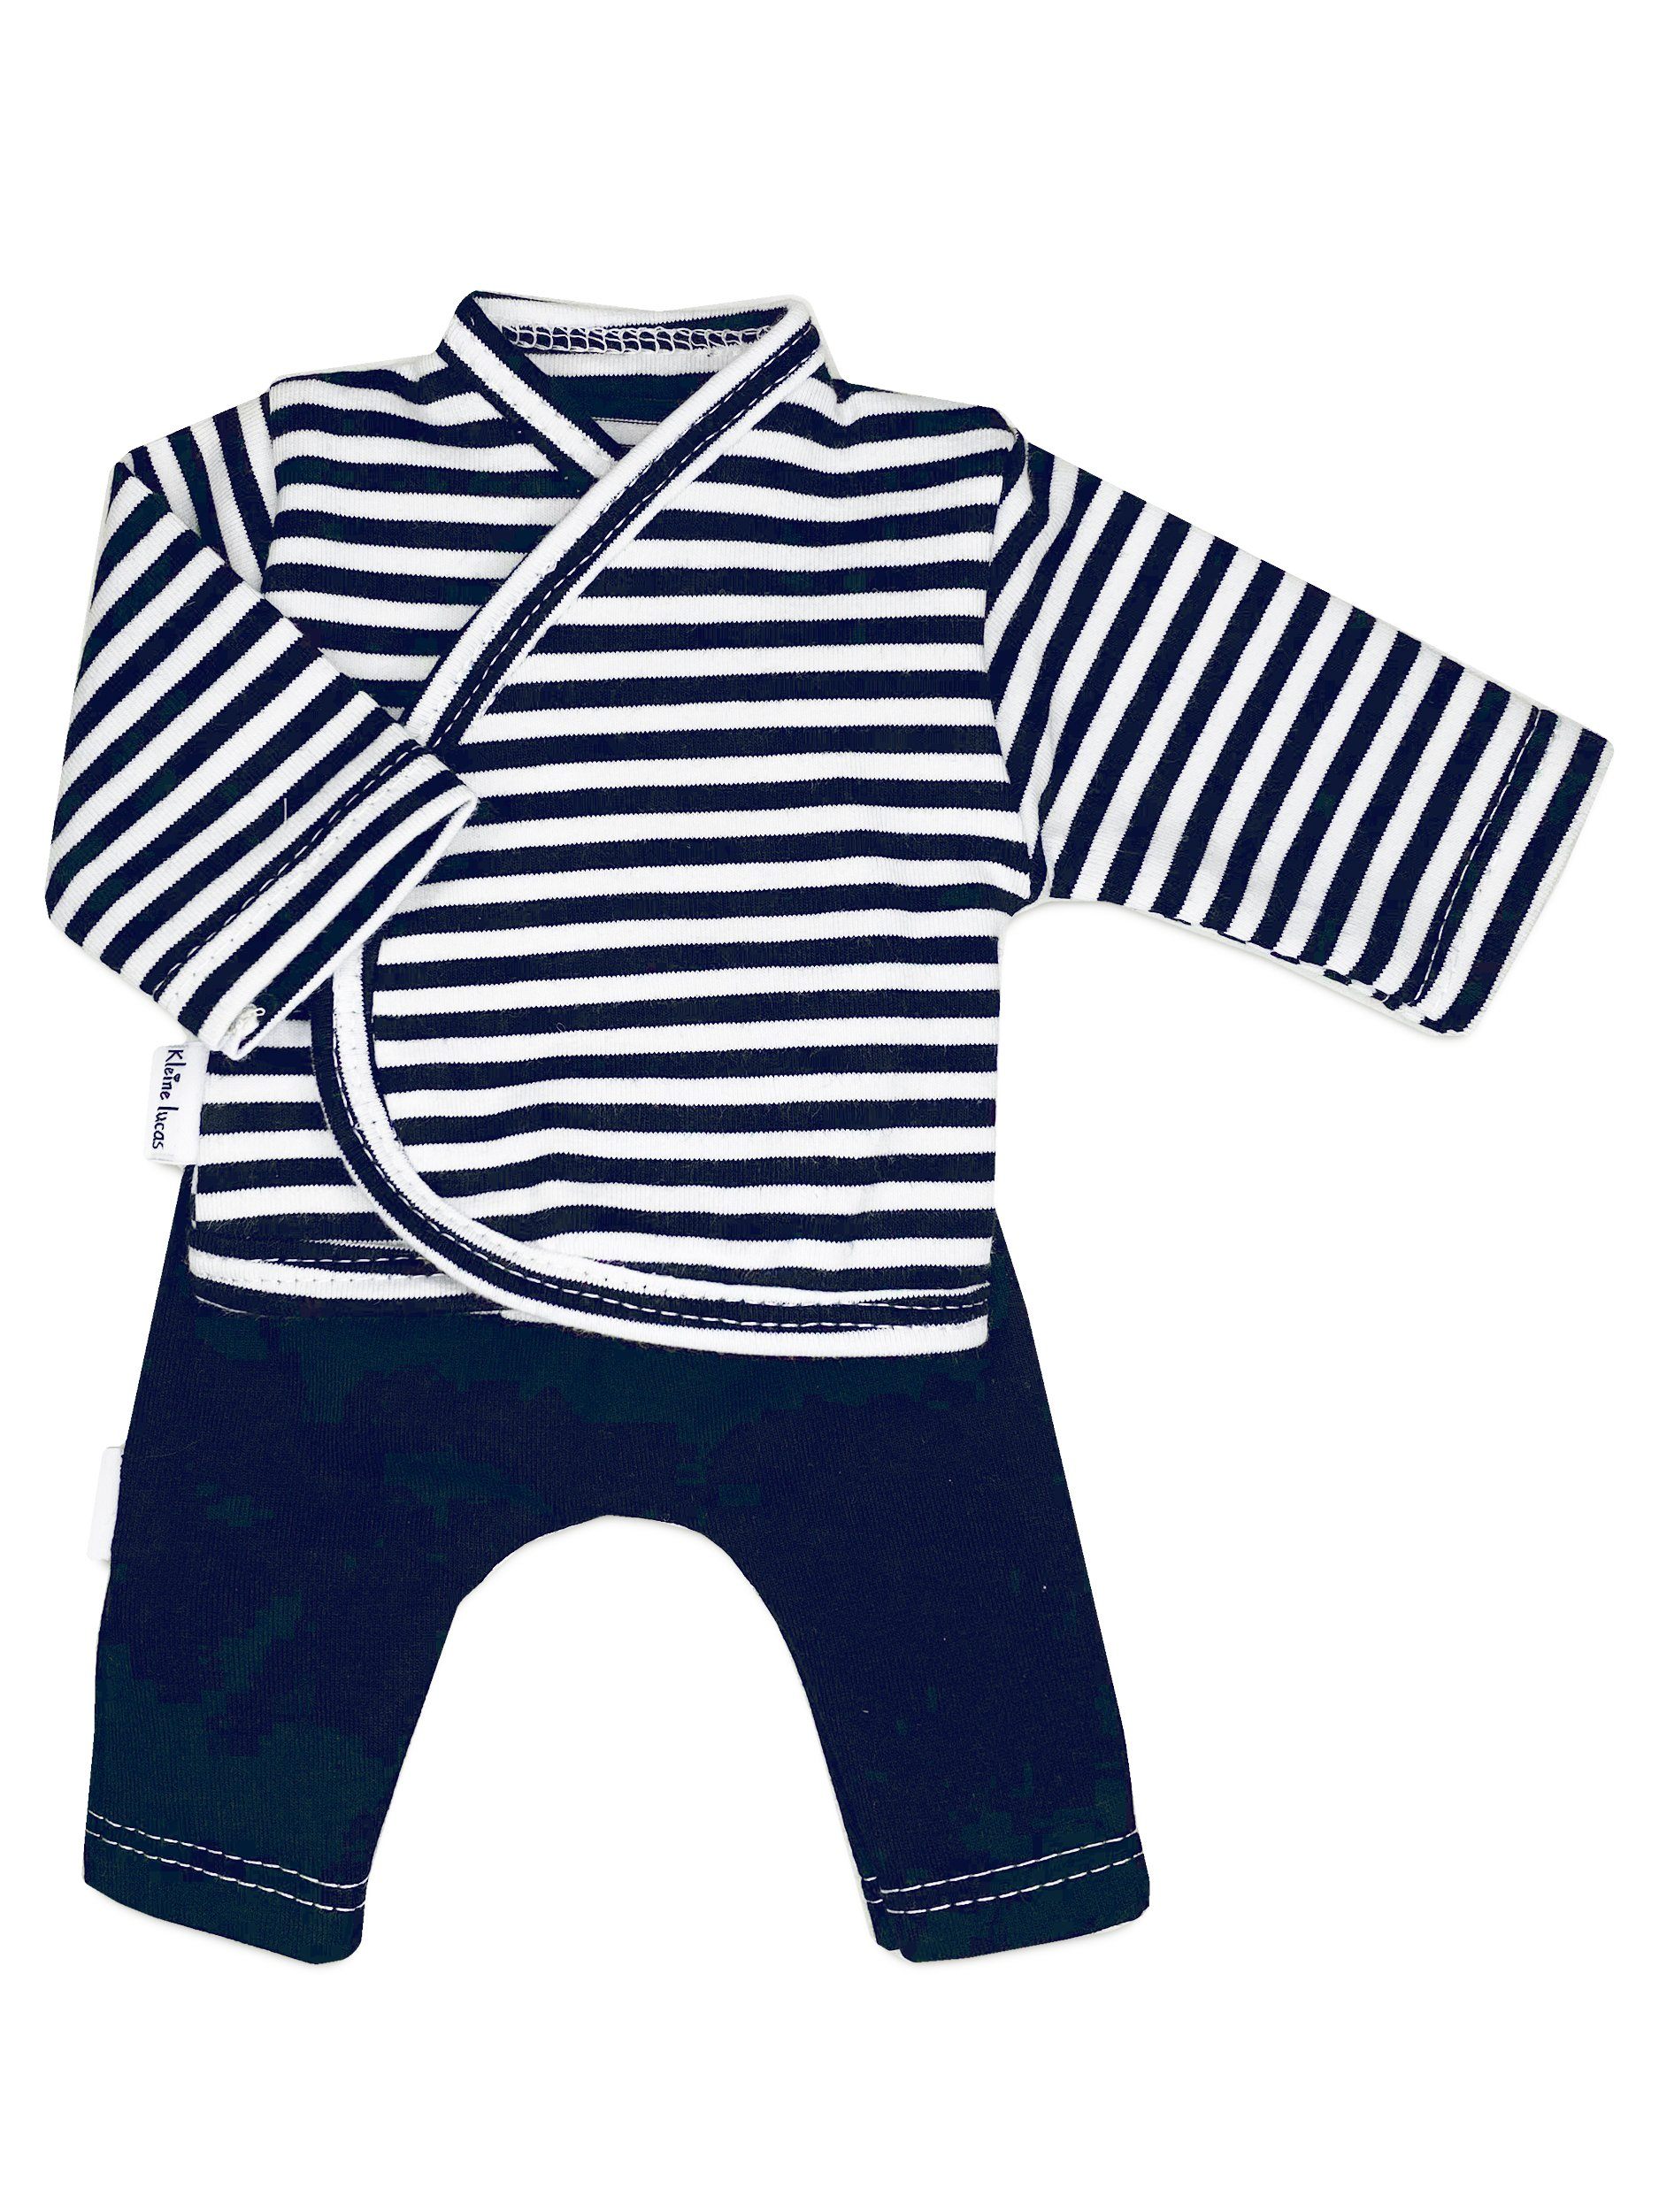 Preemie Clothes, Top & Trouser Set, Navy & White Stripe - Set - Little Lucas